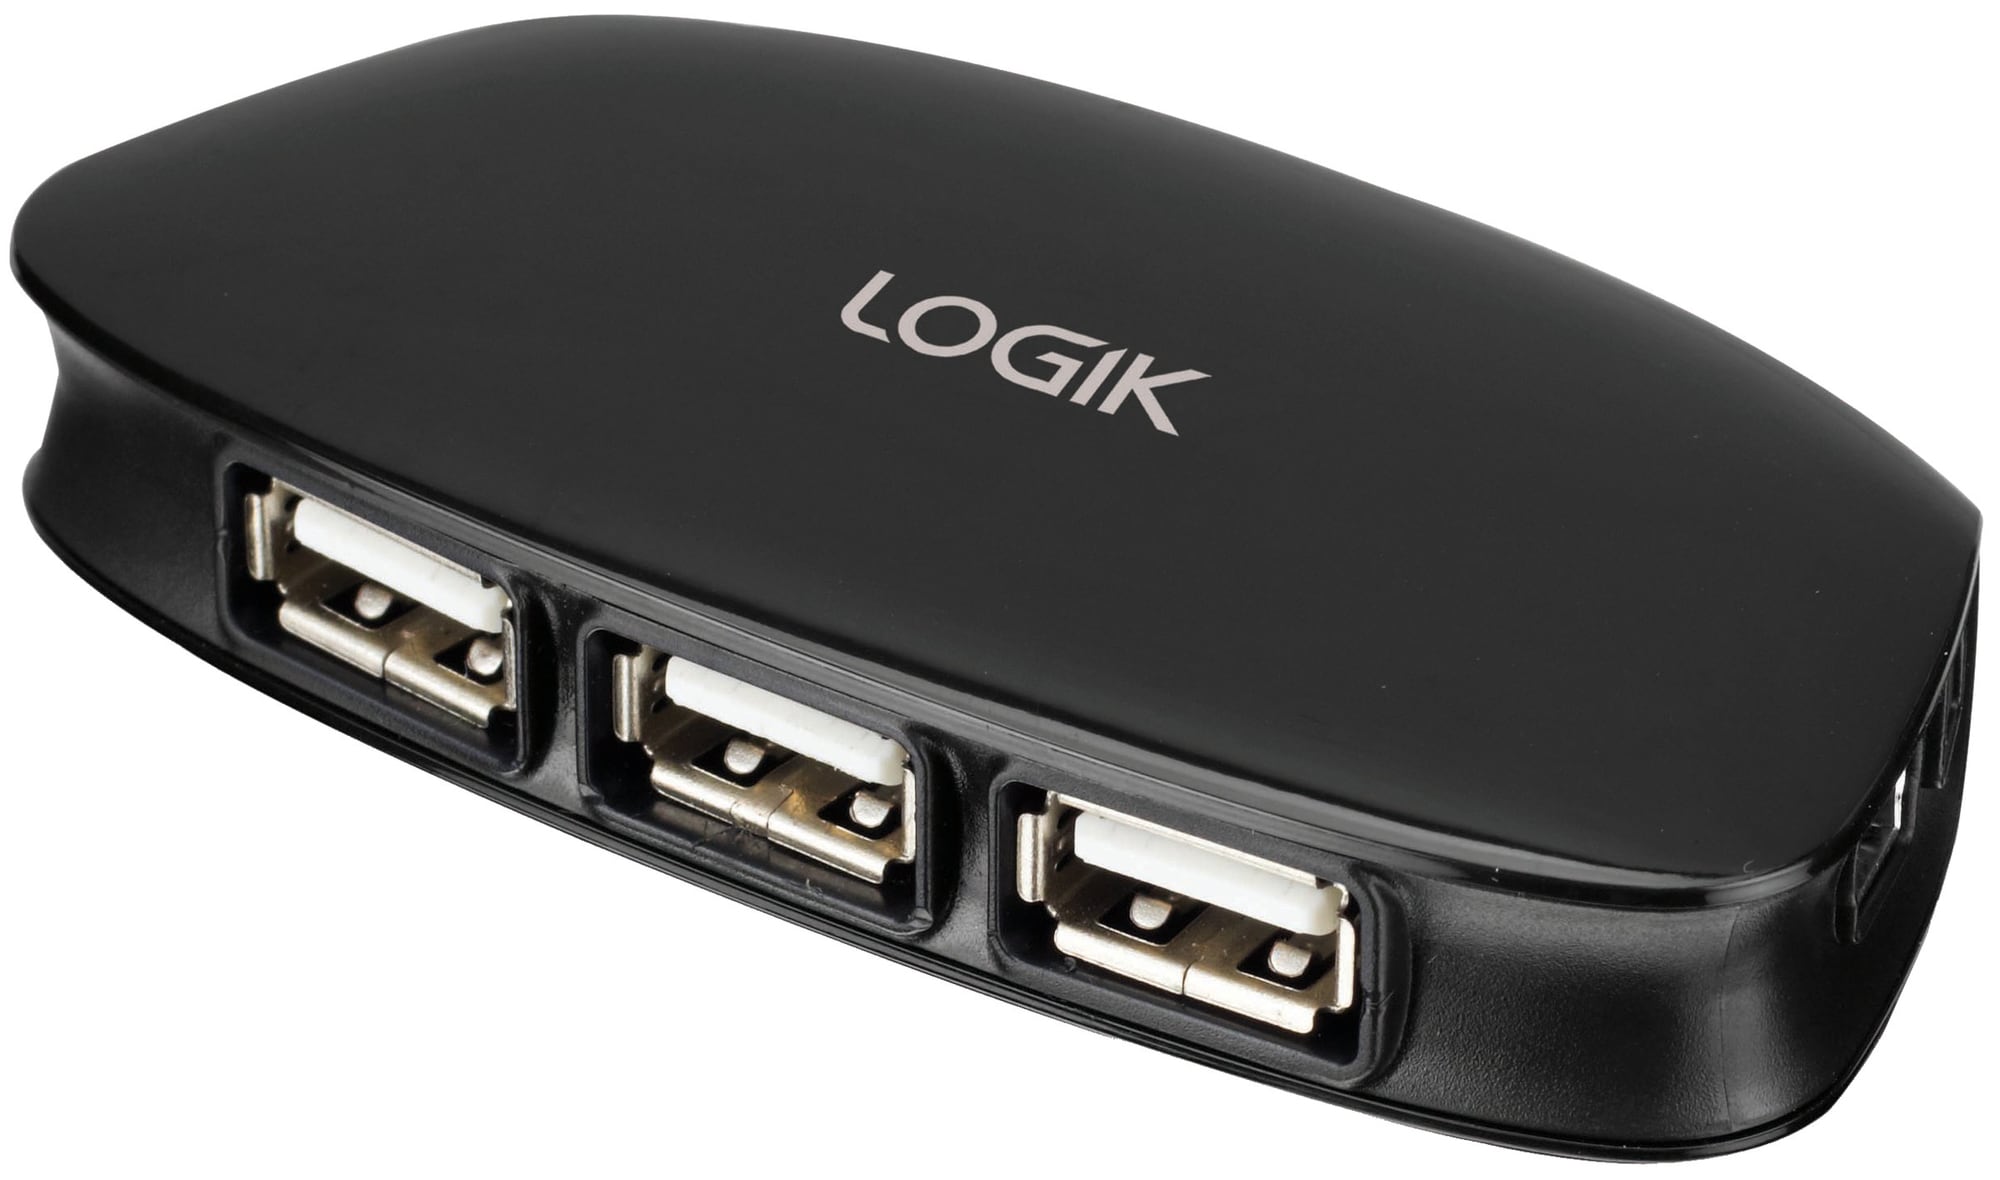 Logik 4-port USB 2.0 hub | Elgiganten